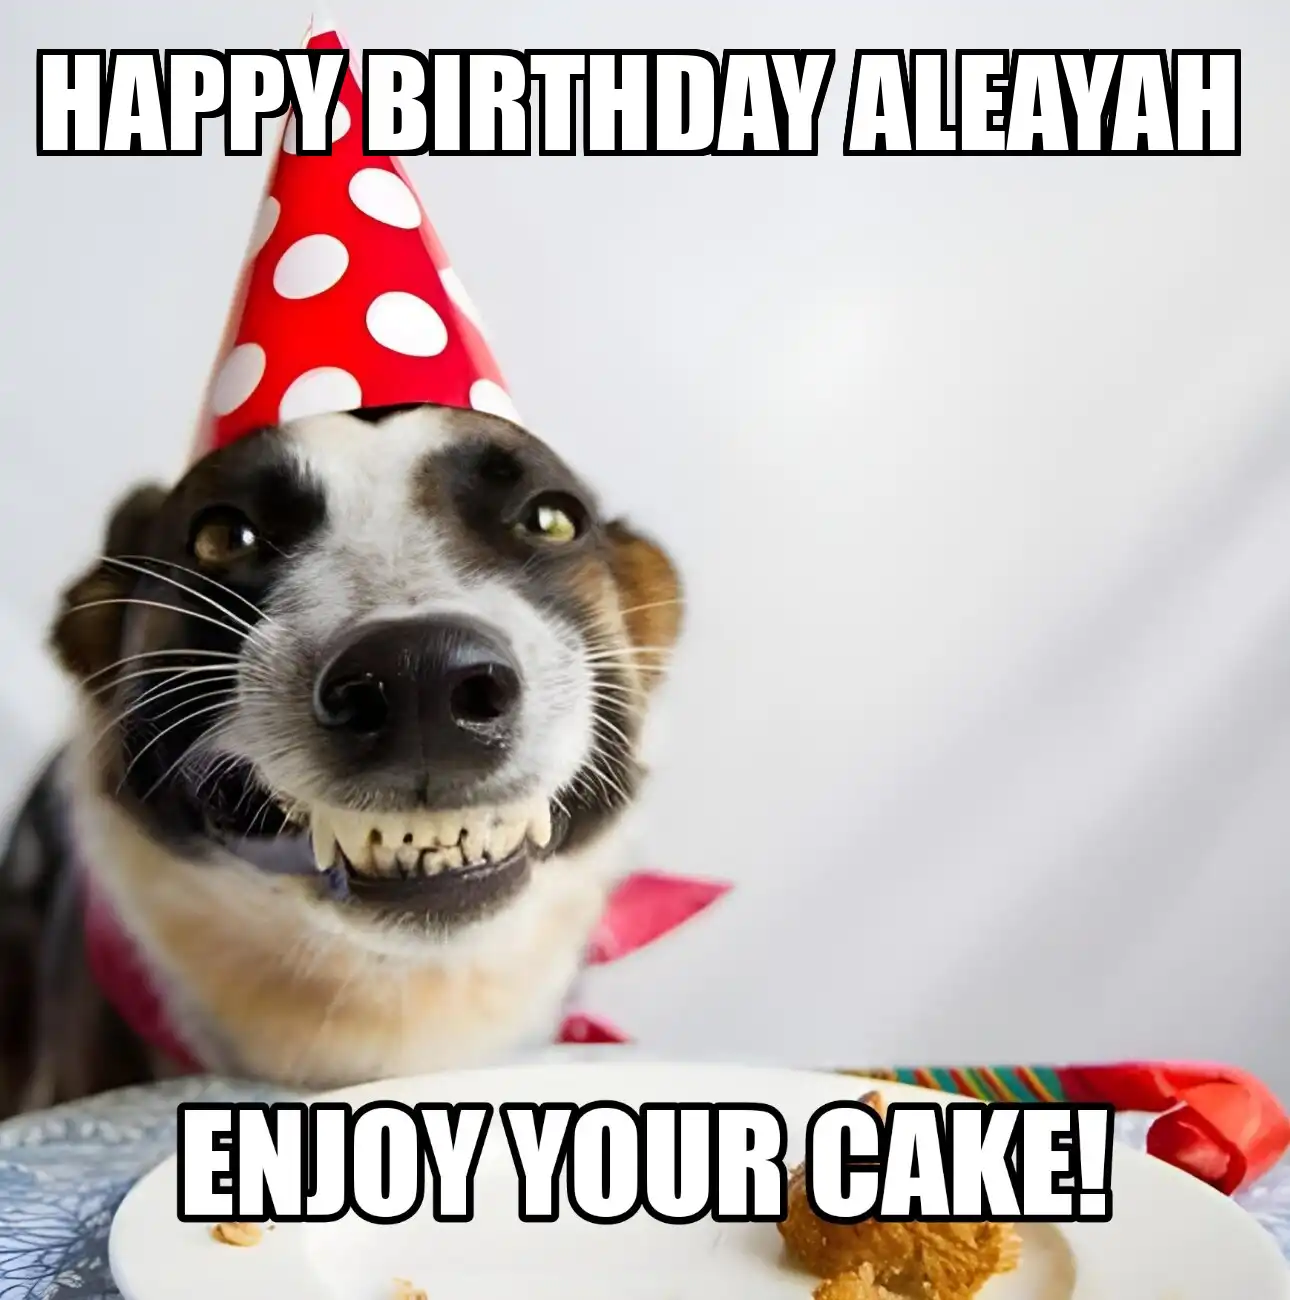 Happy Birthday Aleayah Enjoy Your Cake Dog Meme